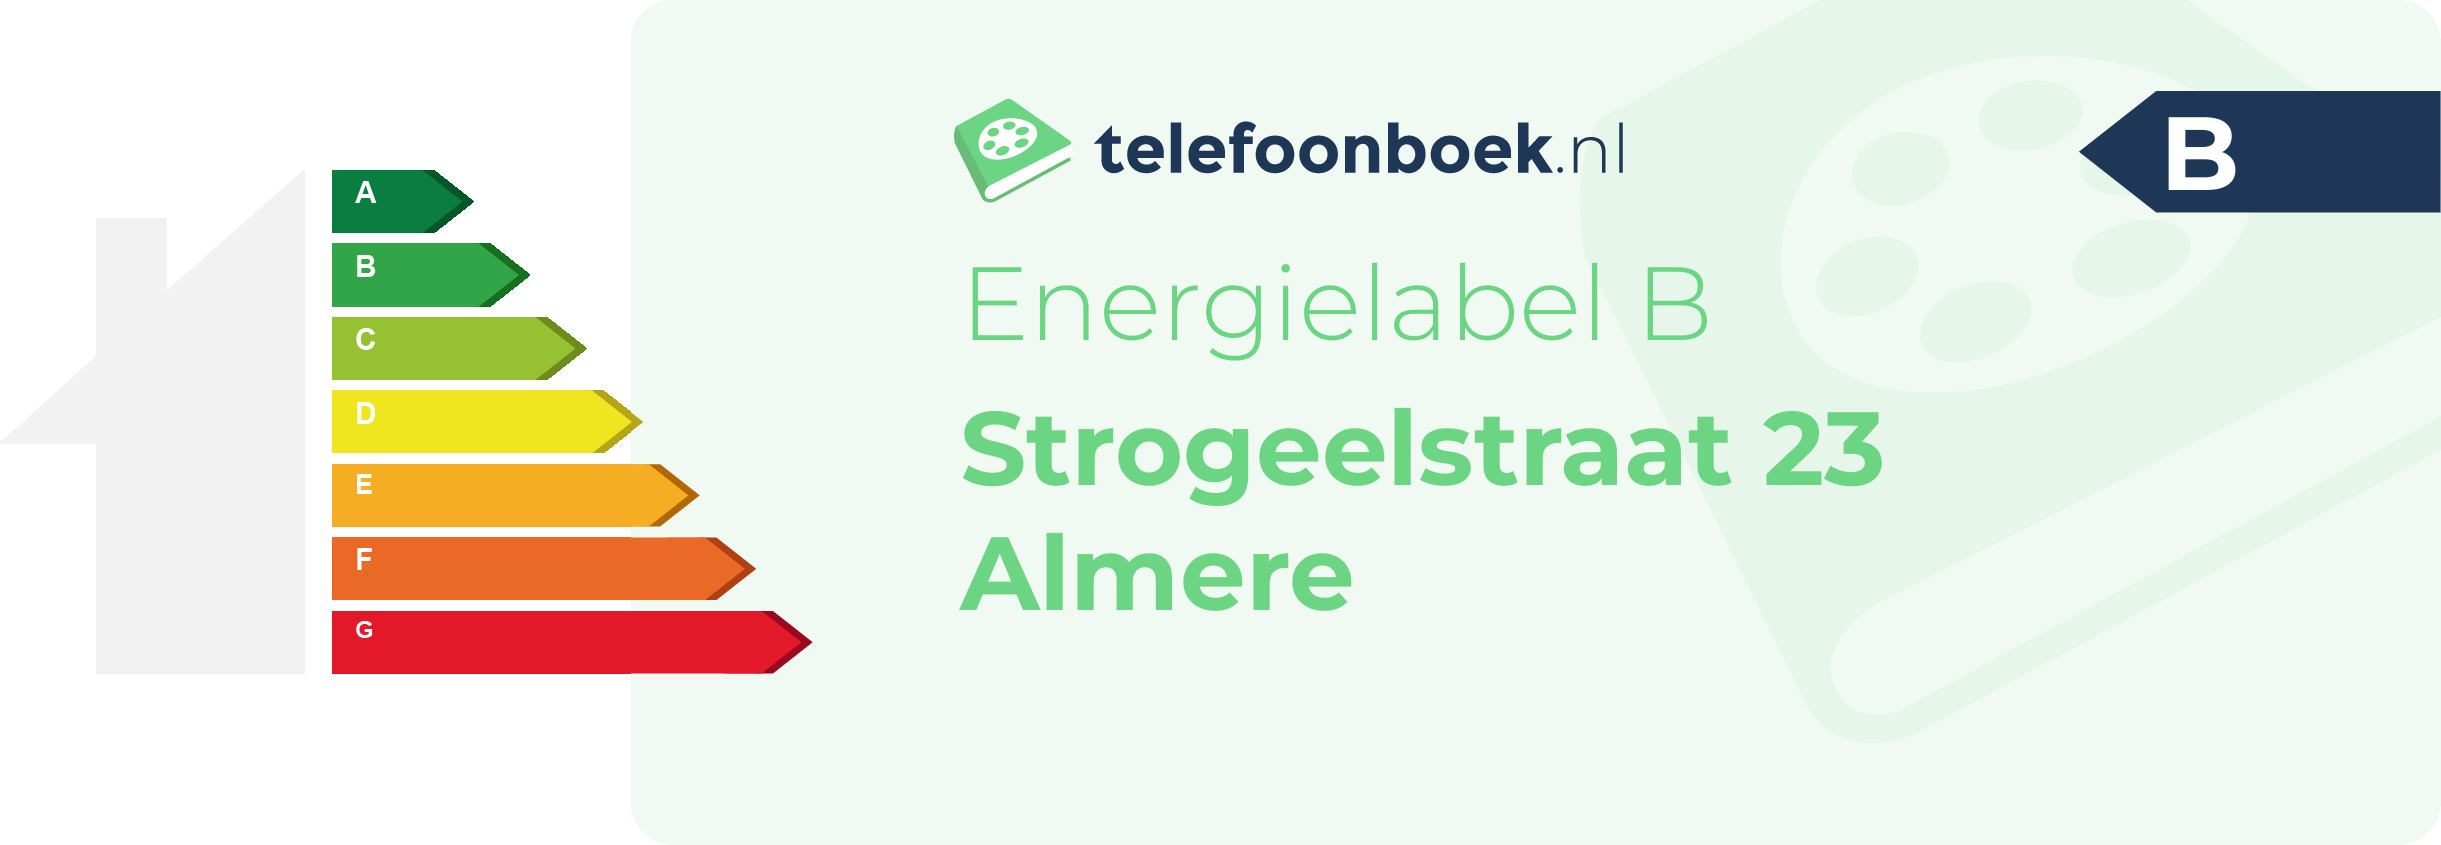 Energielabel Strogeelstraat 23 Almere